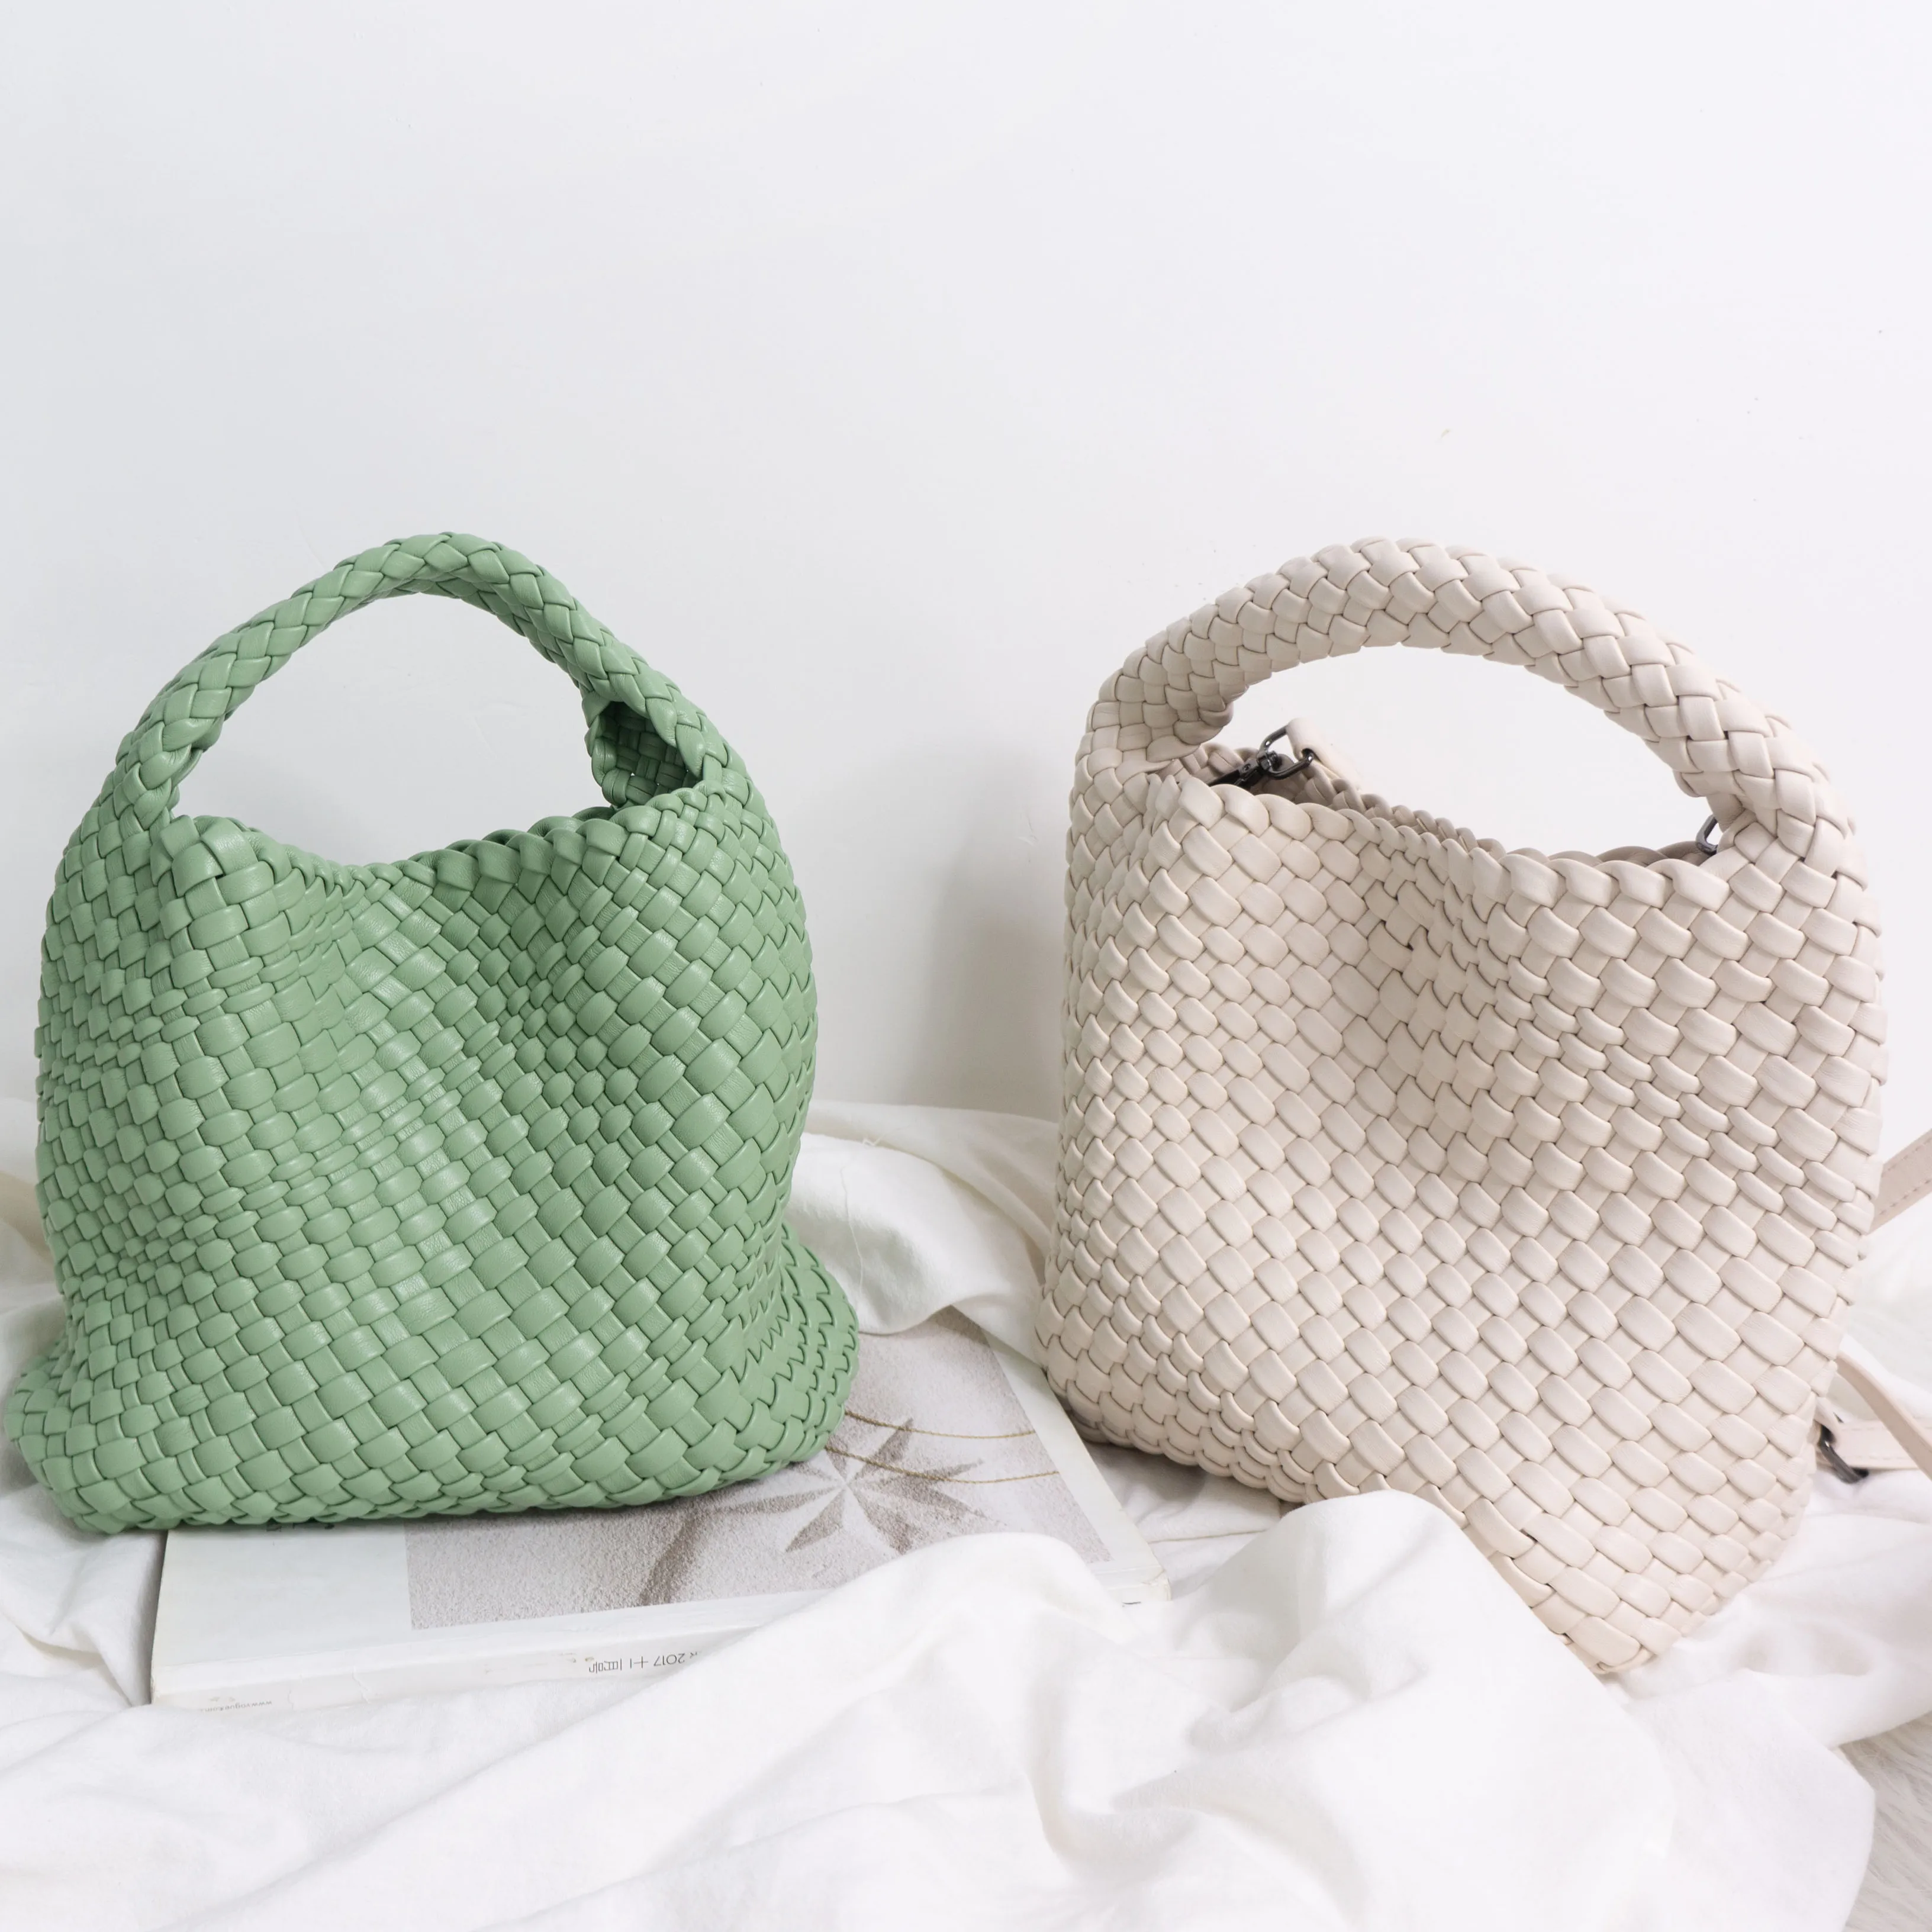 HONOUR ME Fashion Custom Make PU Woven Handbag Soft Leather Beach Crossbody Bag Hand Knitted Tote Bag